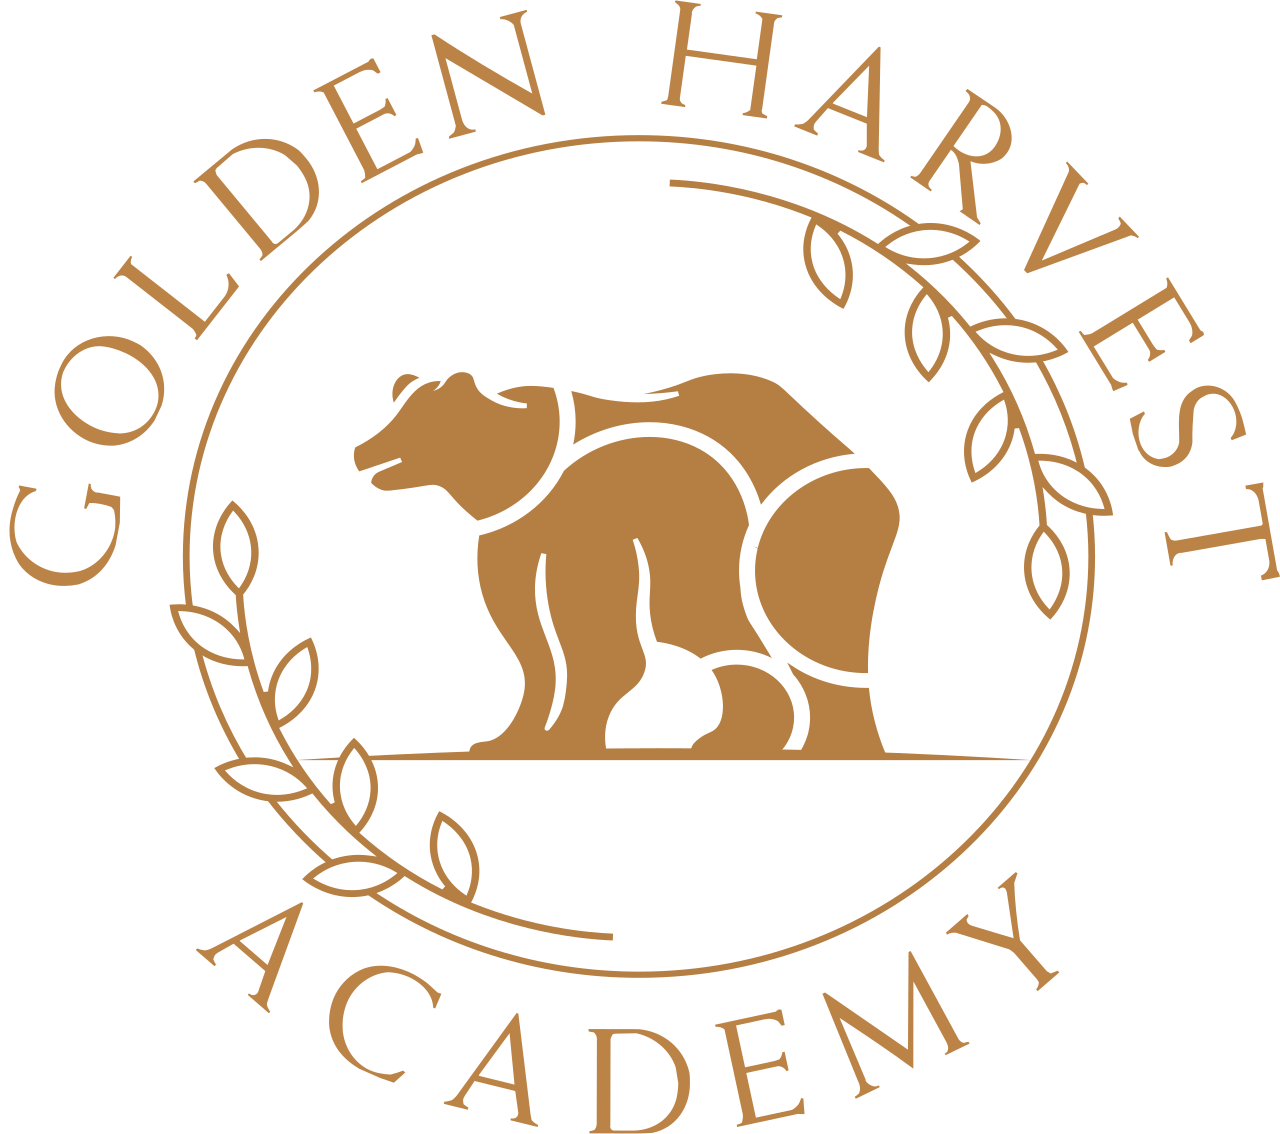 GOLDEN HARVEST's web page